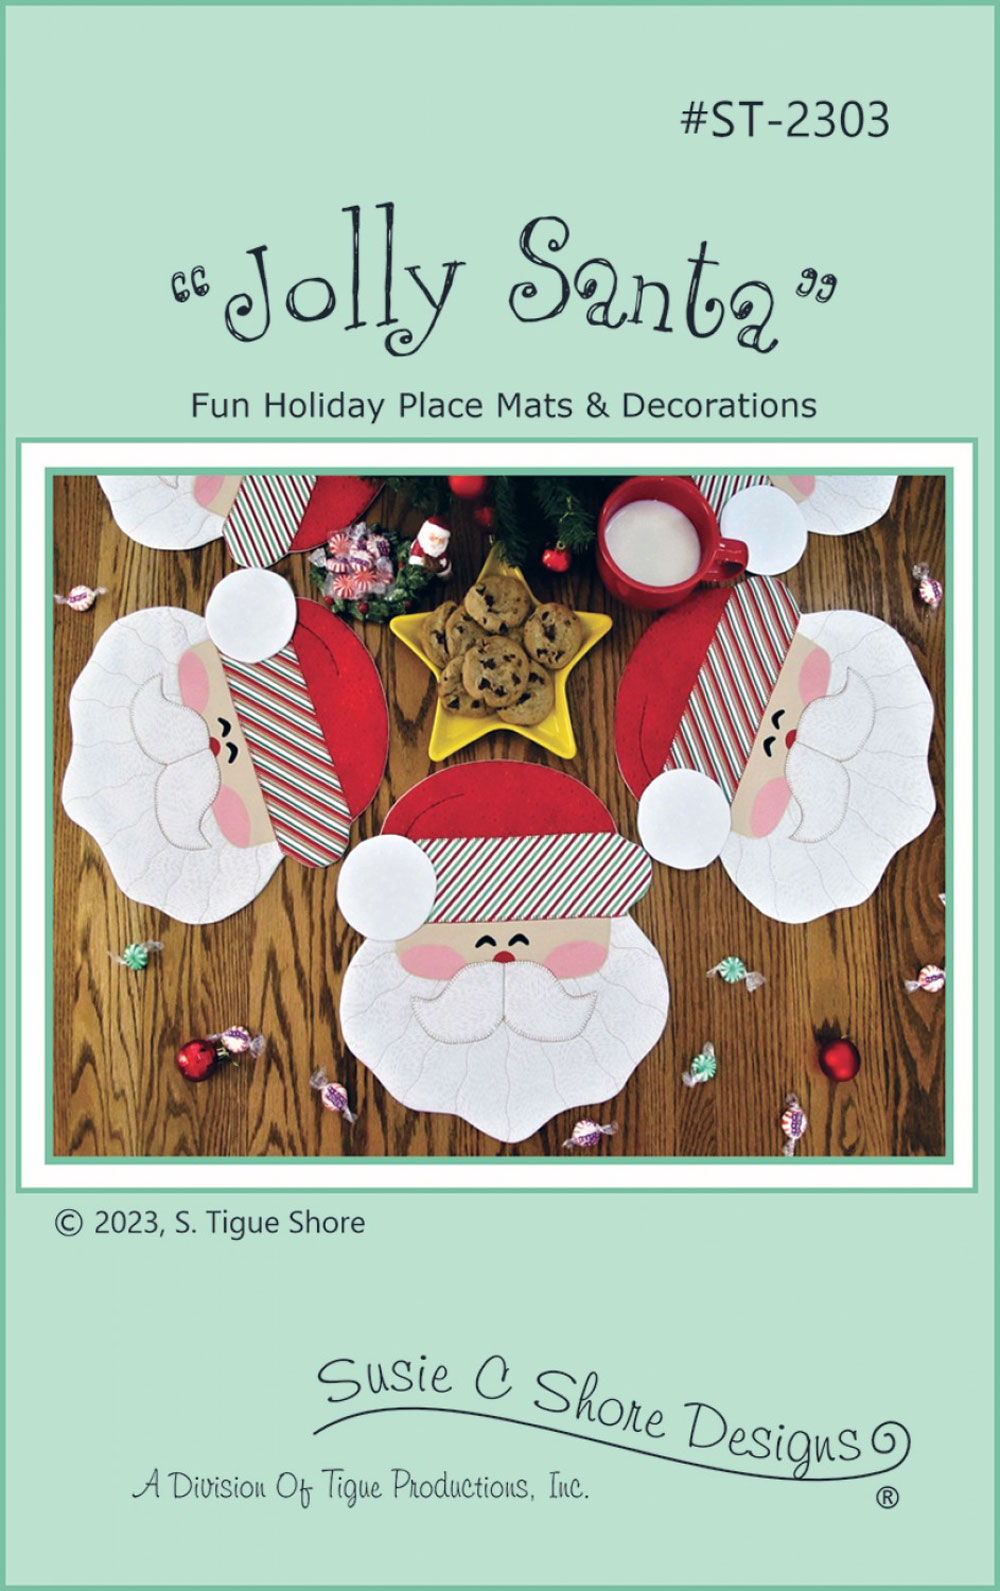 https://www.sewthankful.com/media/Susie_C_Shore_Designs/2023/Jolly-Santa-sewing-pattern-Susie-C-Shore-front.jpg